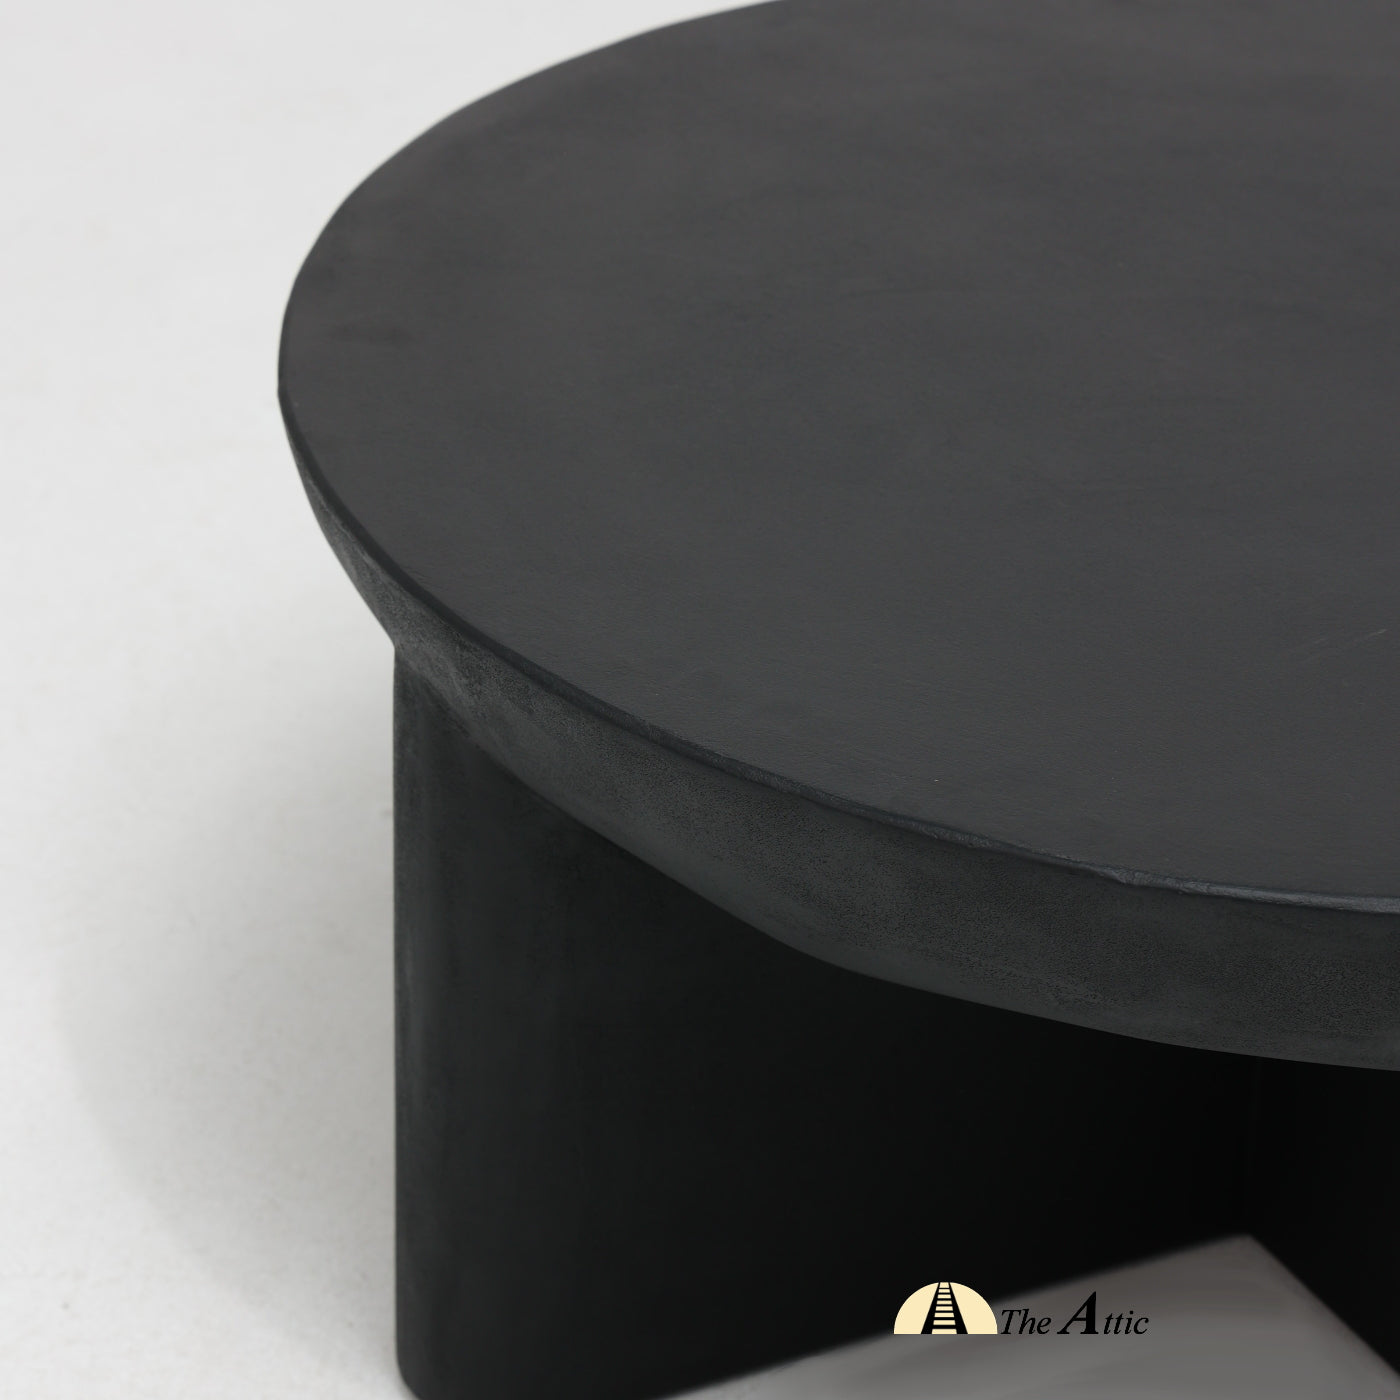 Naga Concrete Finish Round Coffee Table, Black